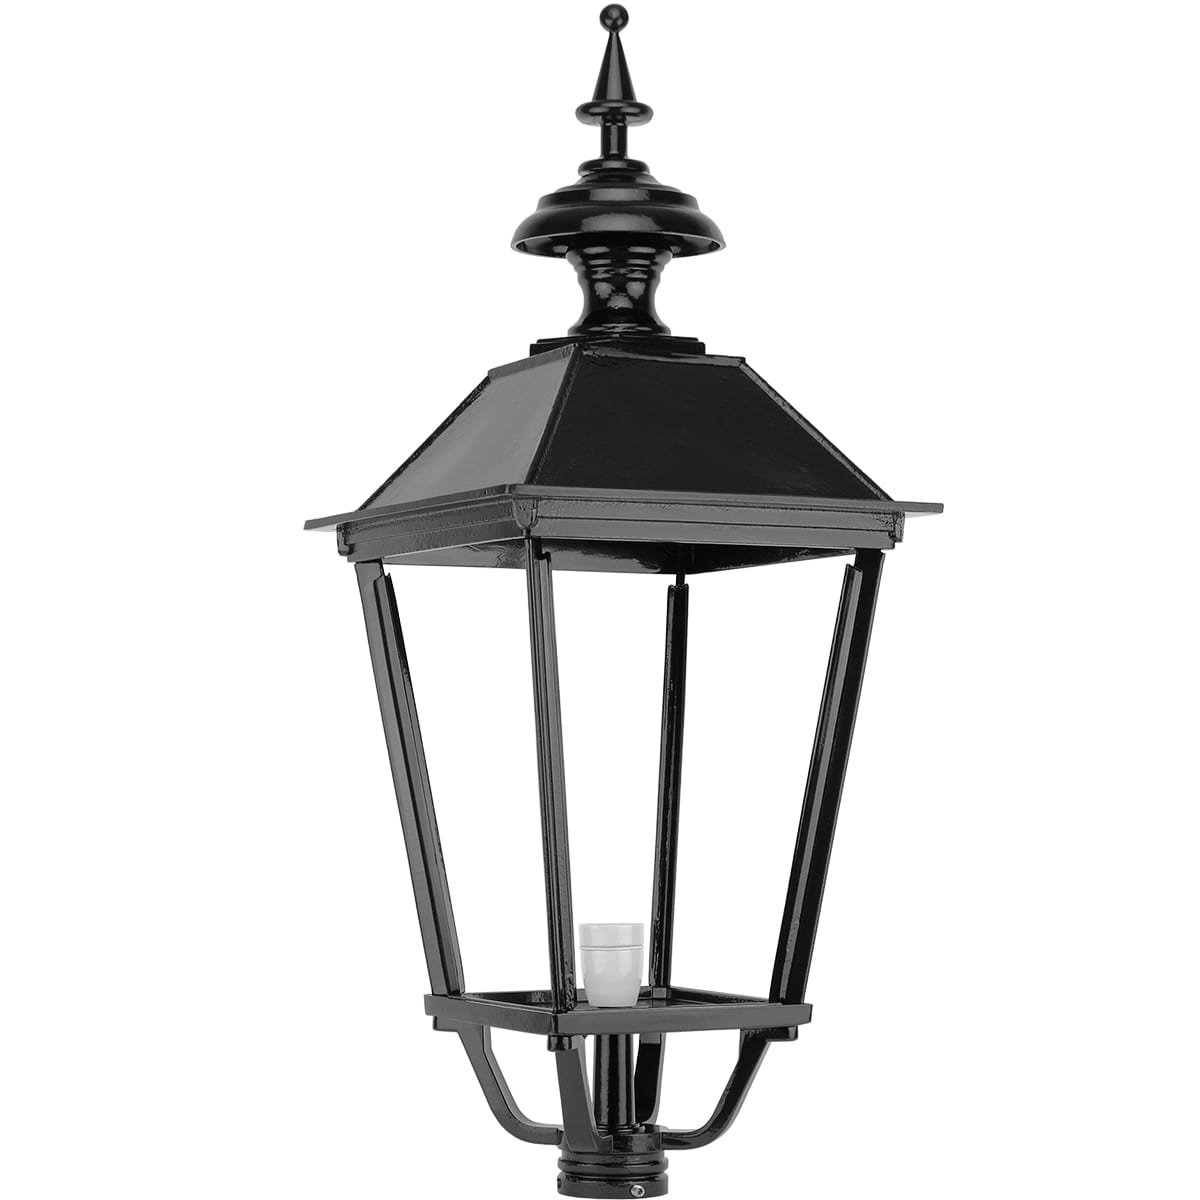 Loose lamp shade K02 - 75 cm